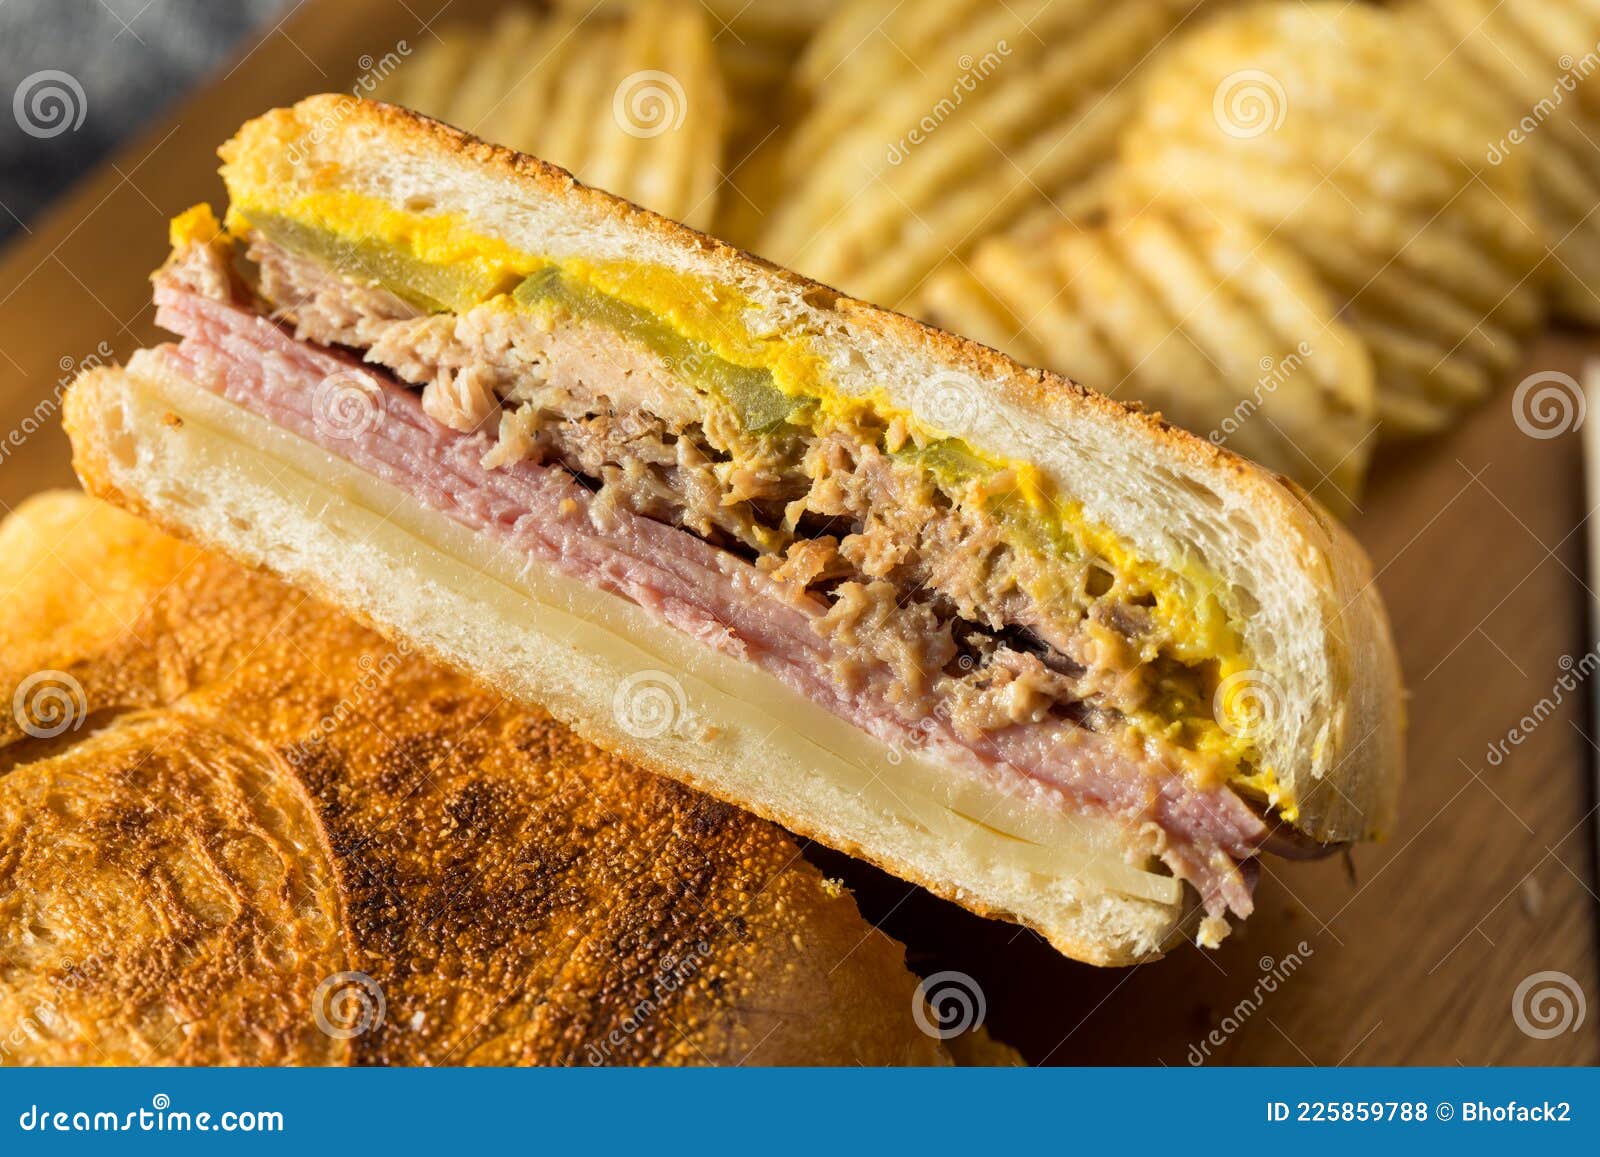 hearty homemade cubano pork sandwich